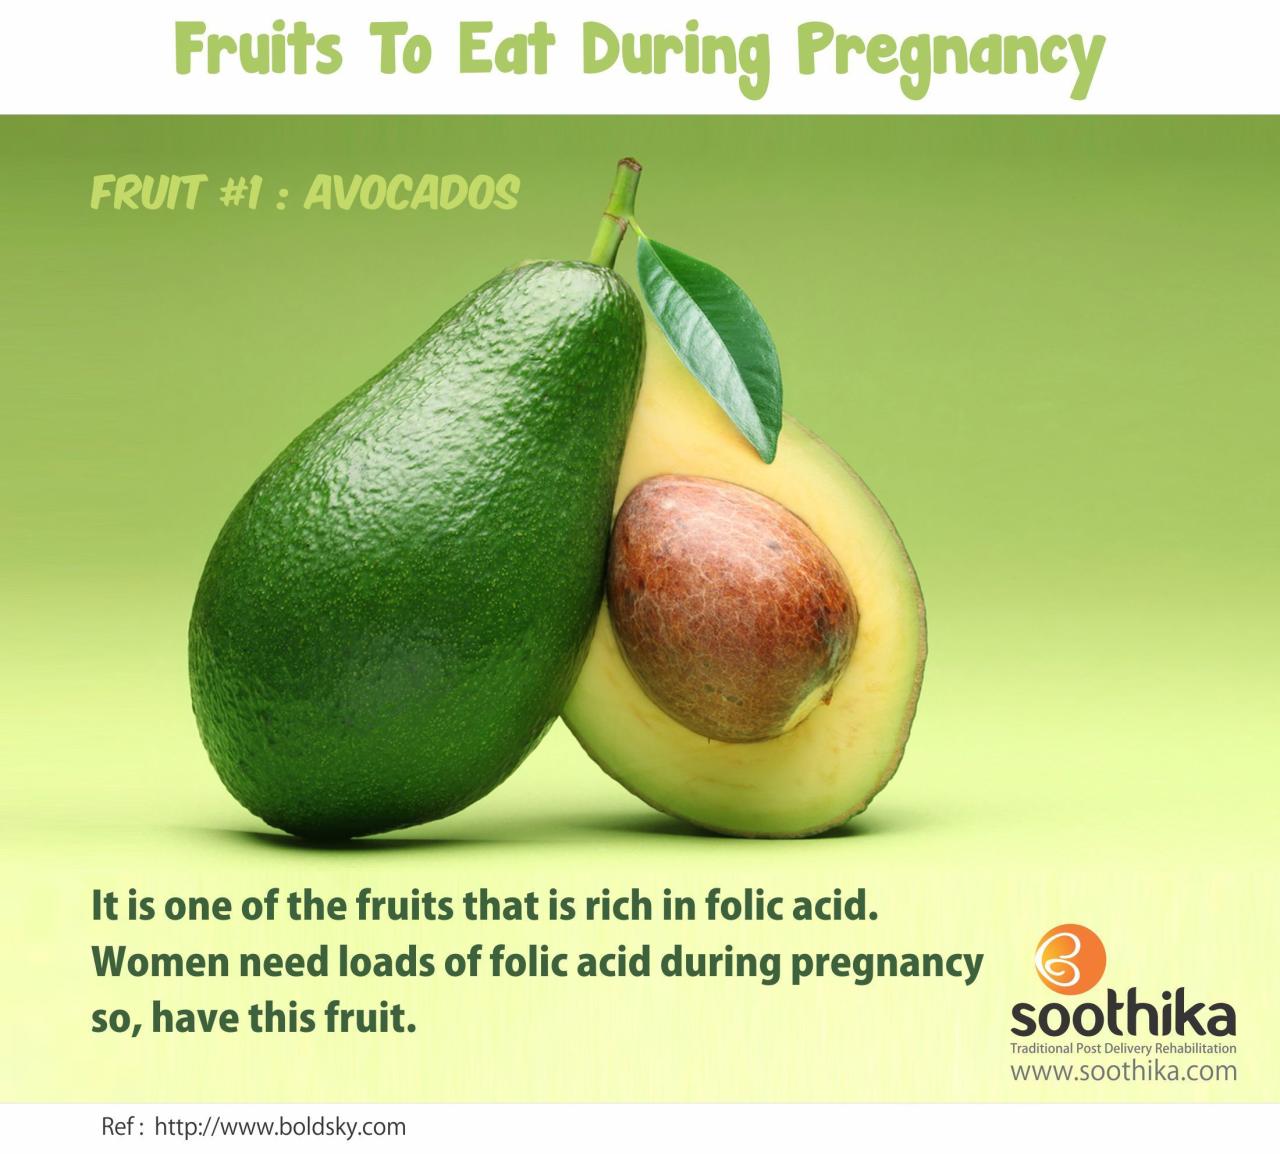 Manfaat buah alpukat untuk ibu hamil